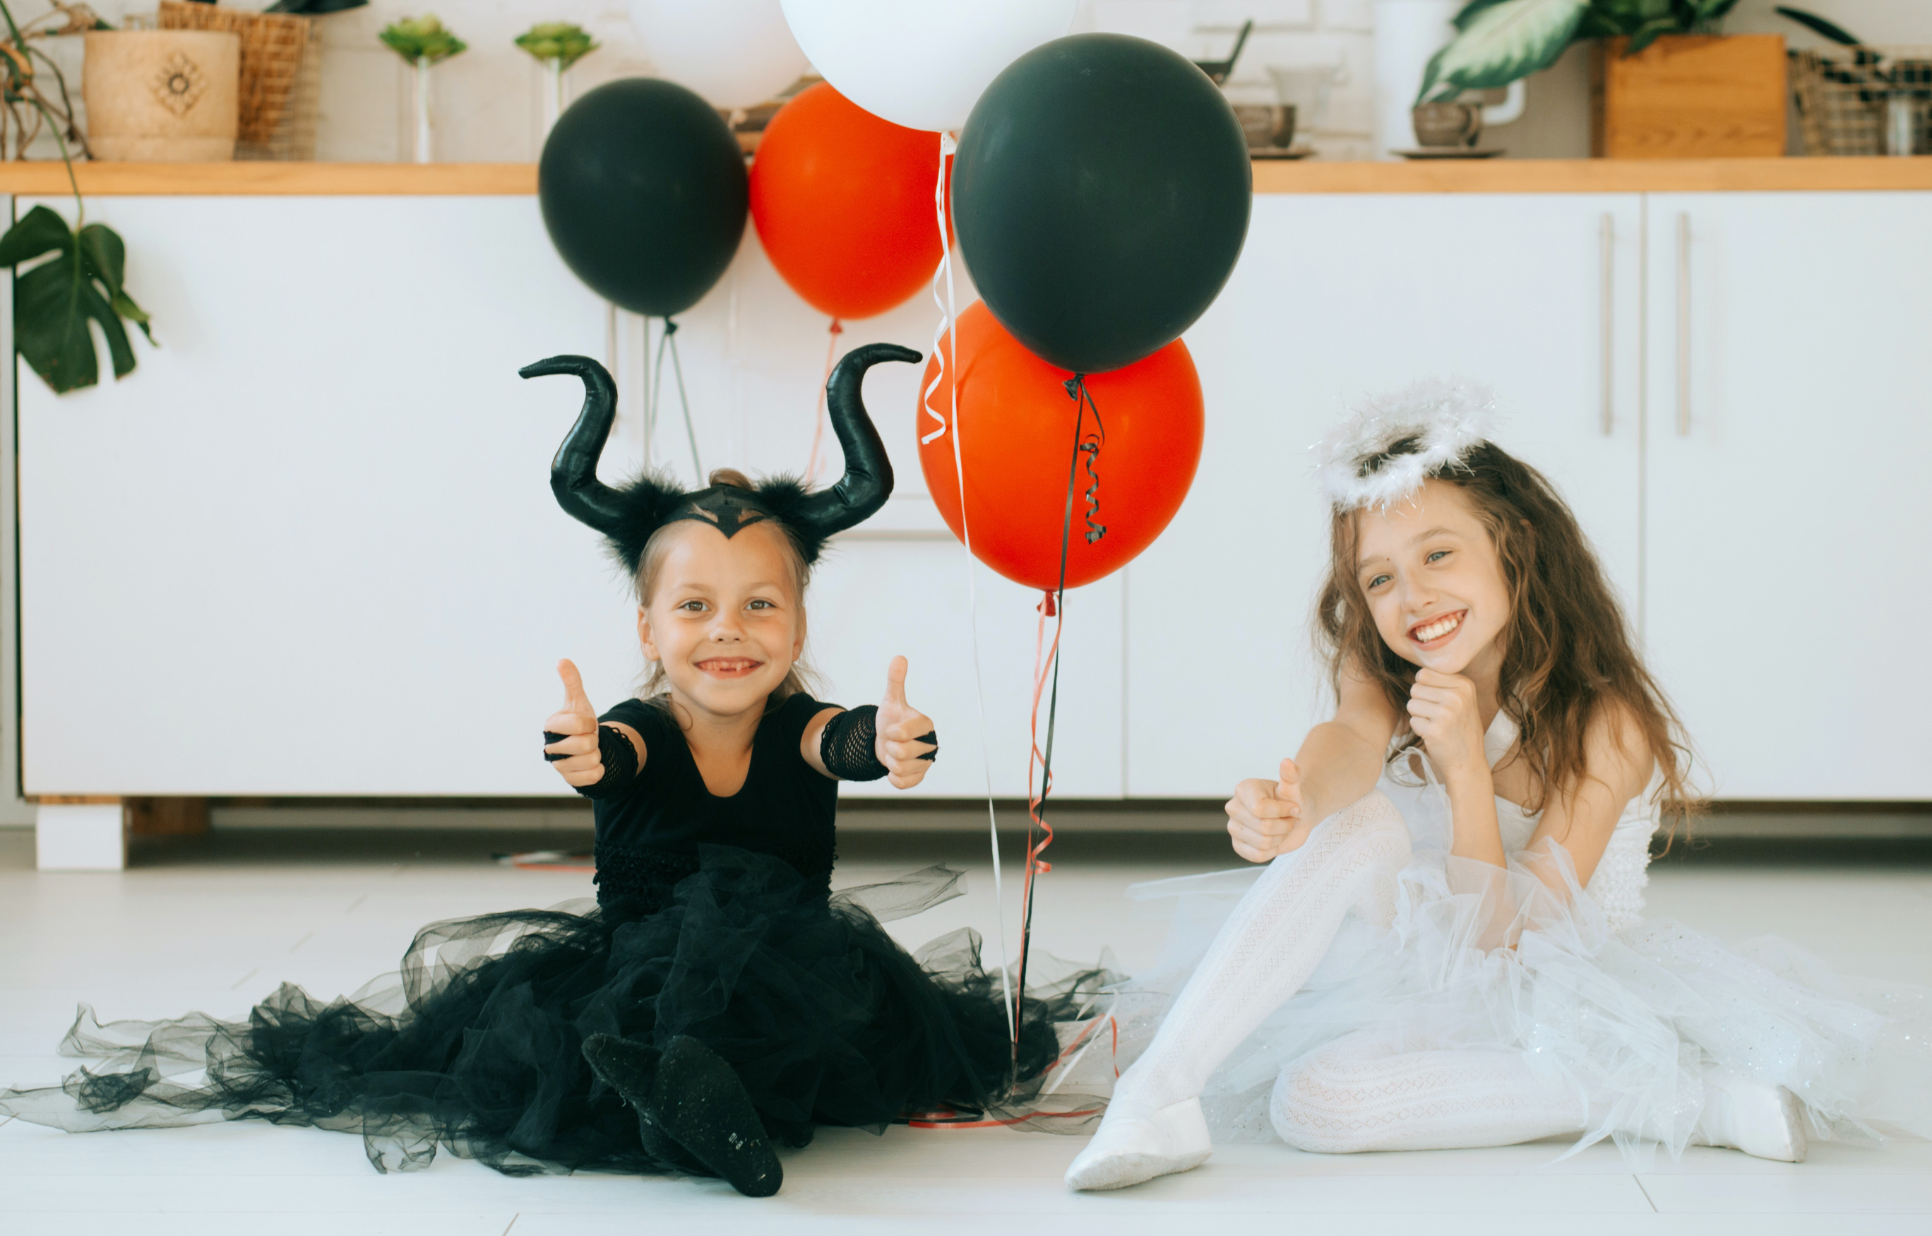 8 Fun Halloween Costume Ideas for Kids